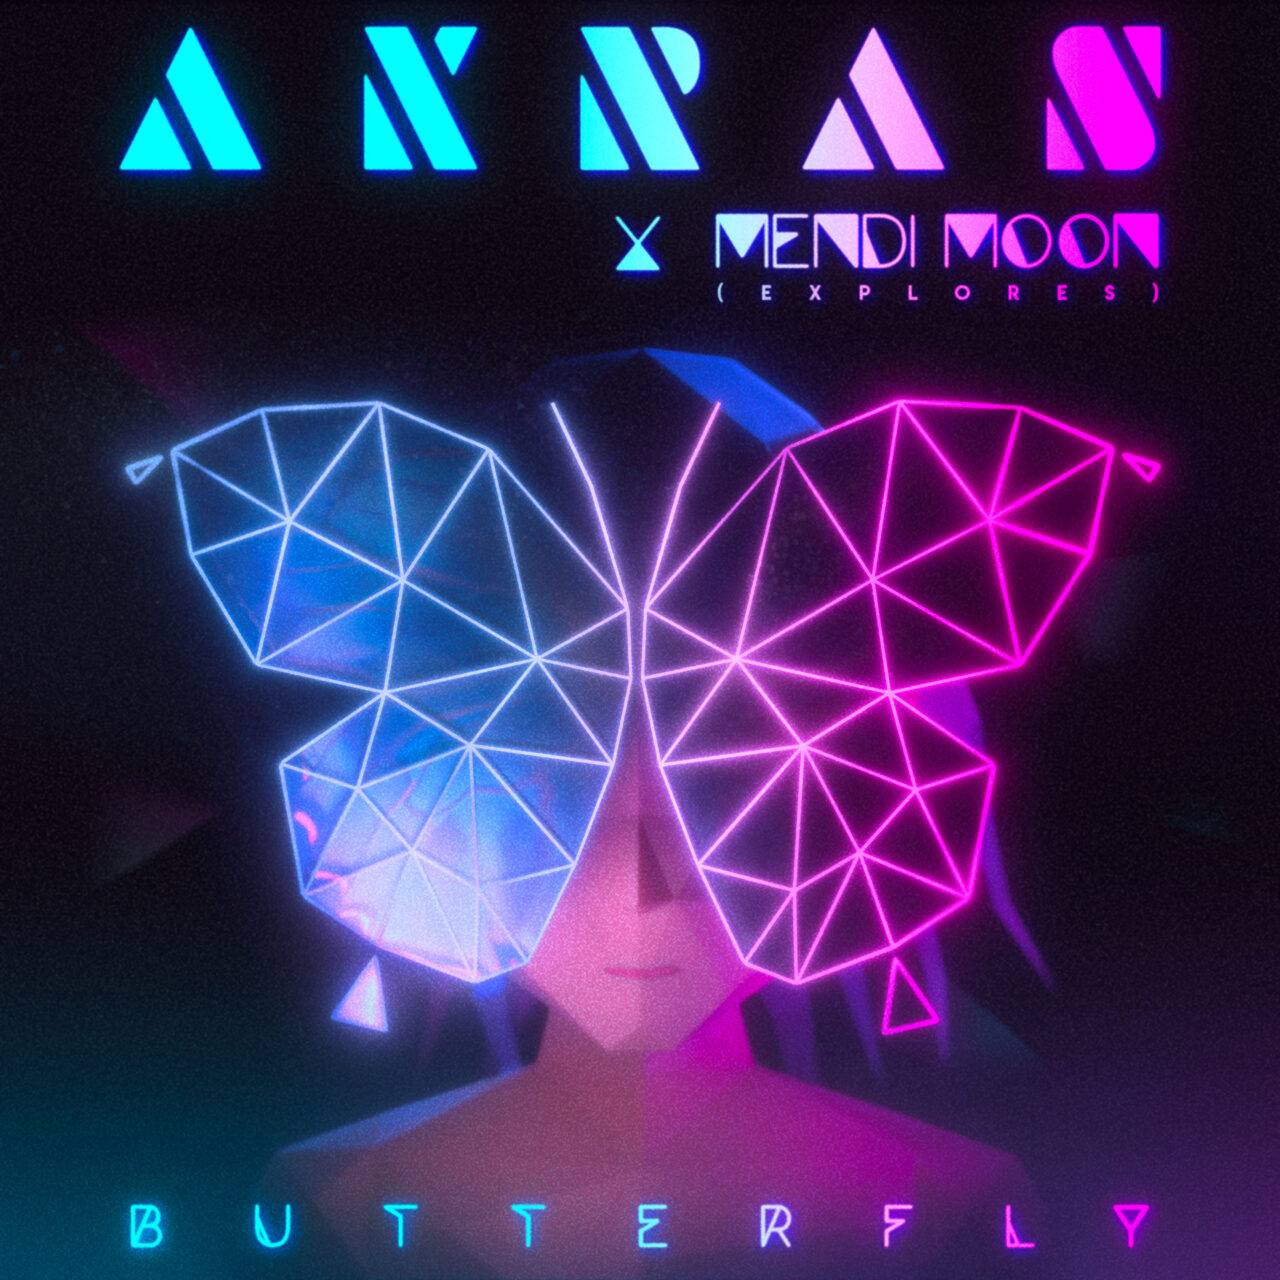 Kansikuva - AKRAS x MENDI MOON (explores) - Butterfly